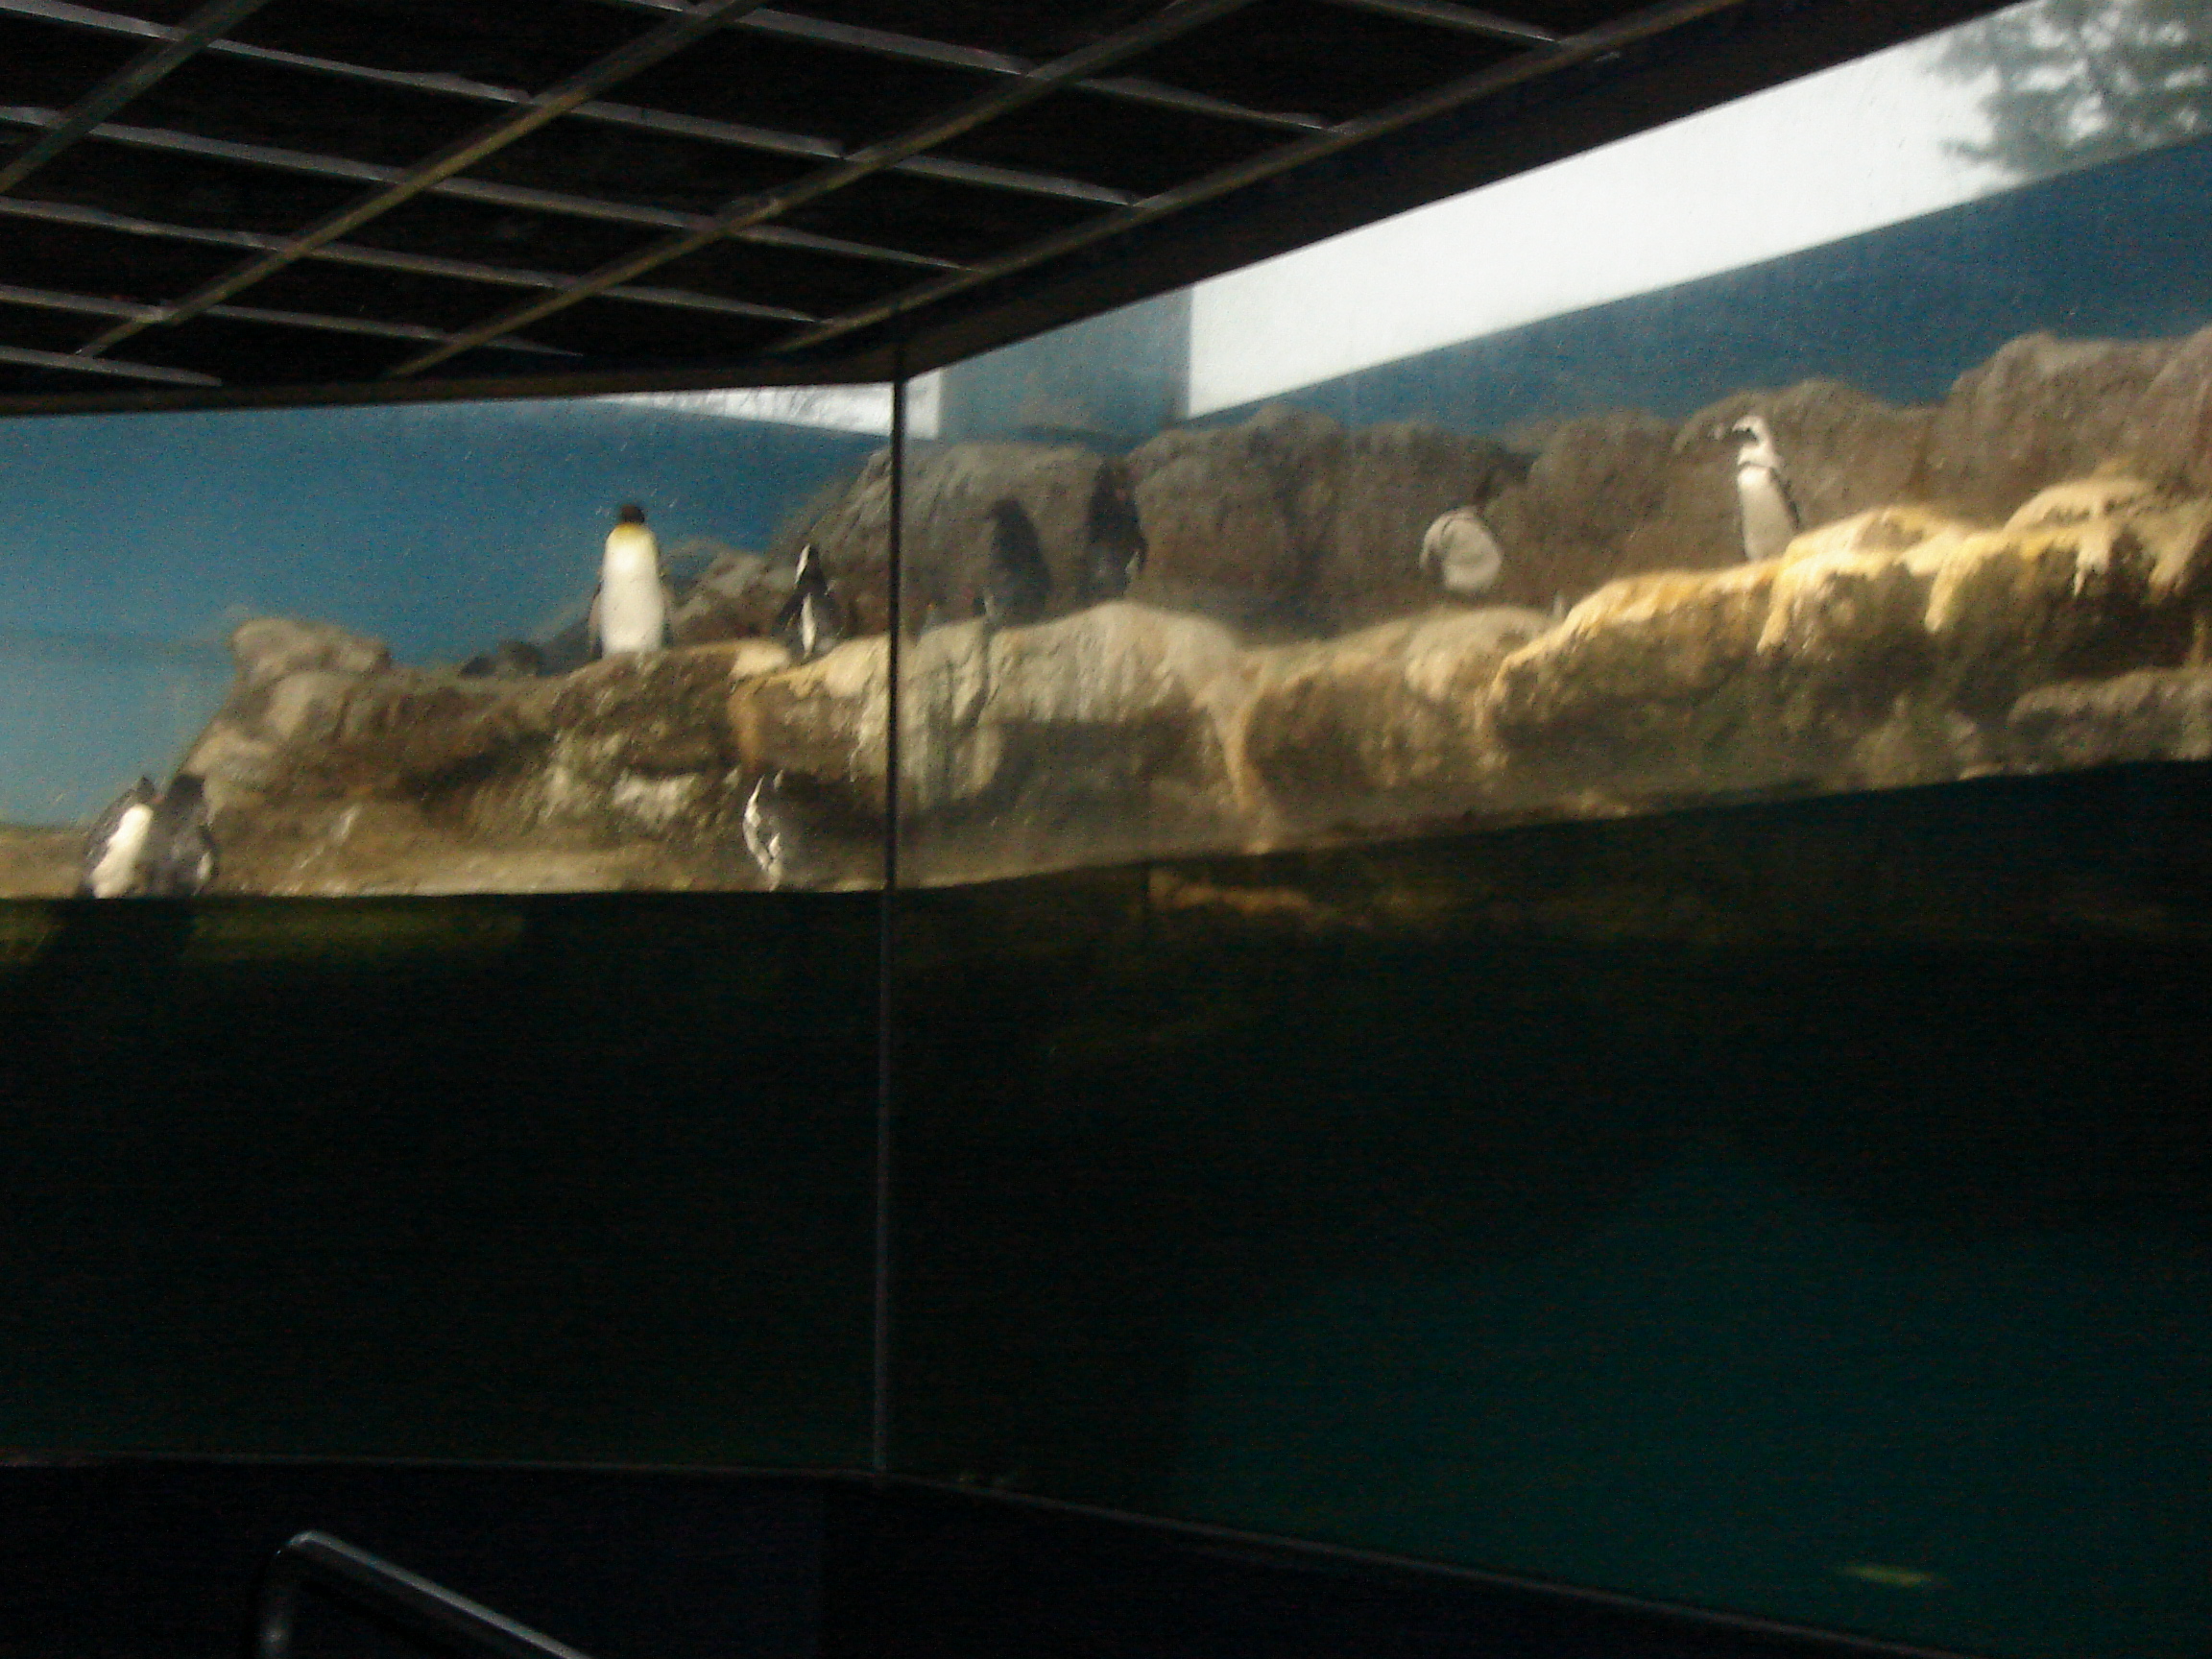 a large glass aquarium spans most of a room